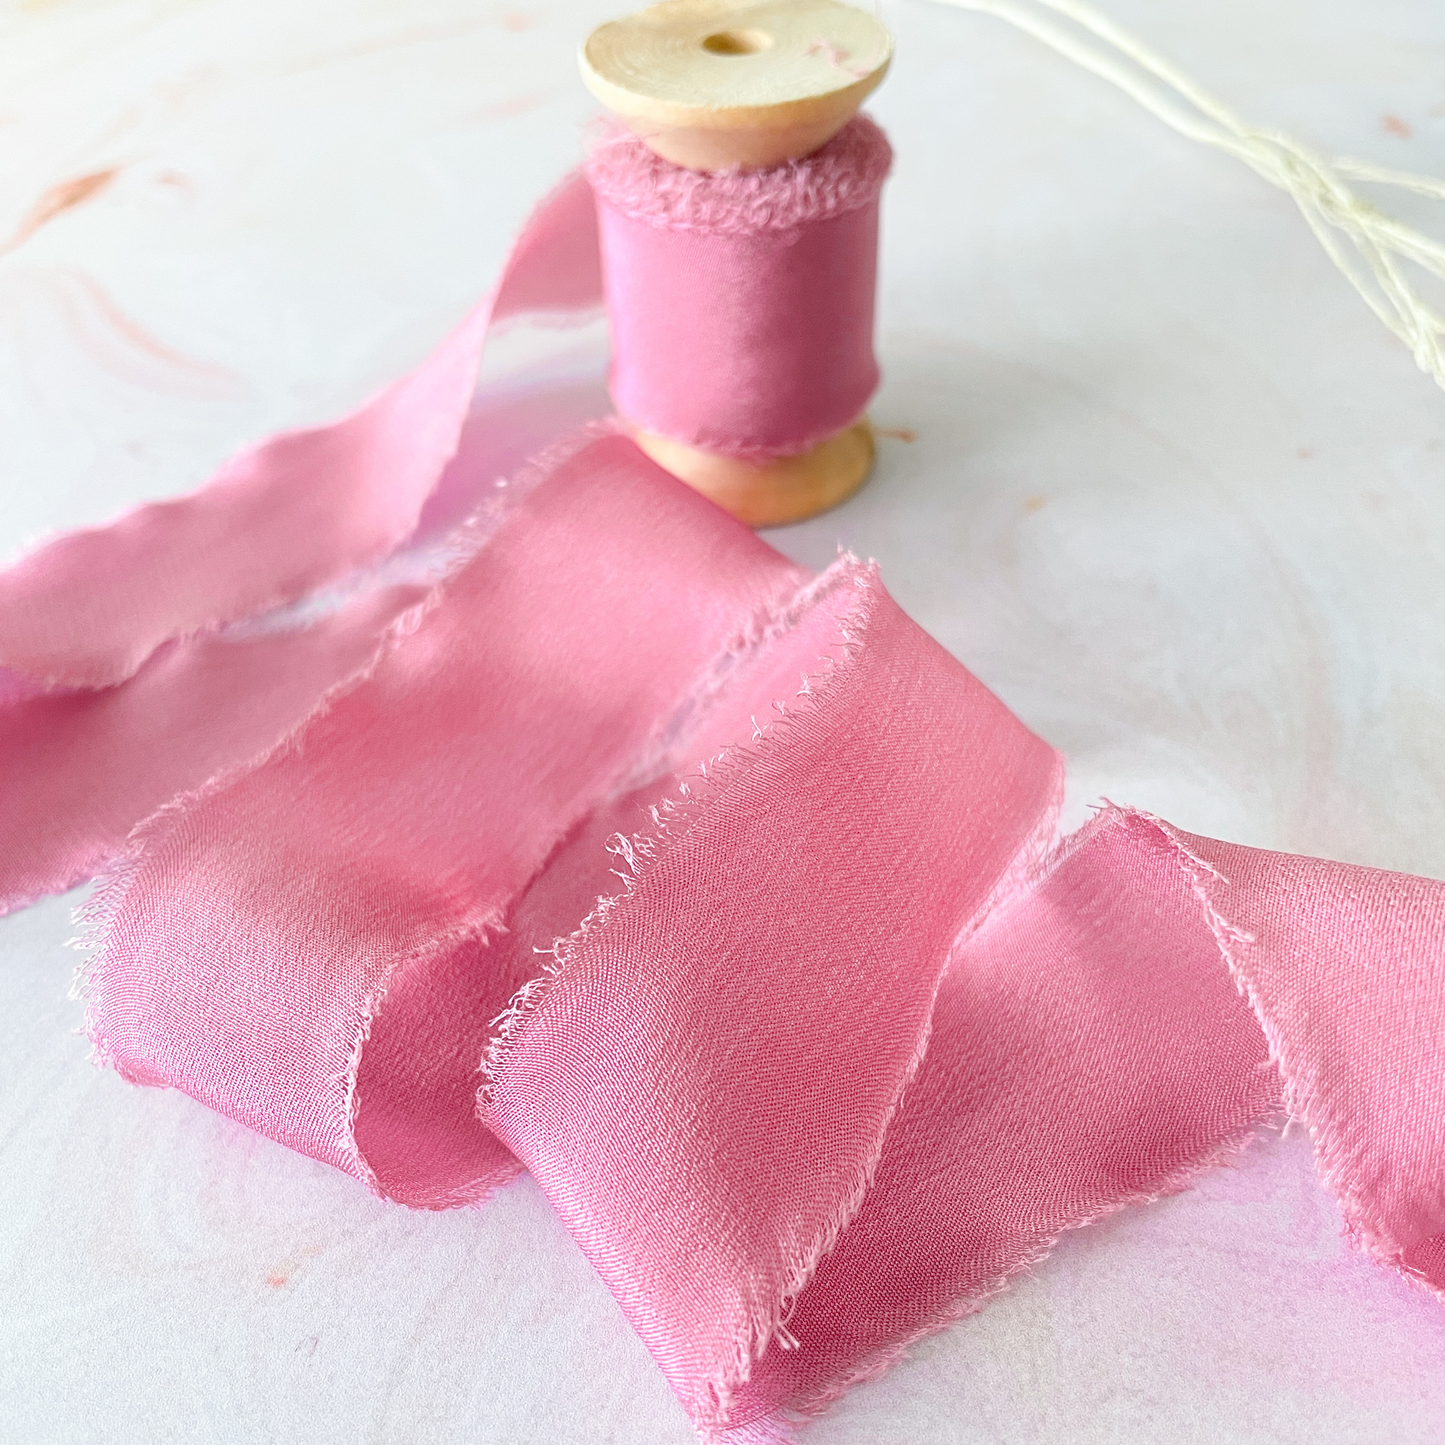 Silk Ribbon in Soft Raspberry Art & Crafting Materials thenaturalpapercompany   